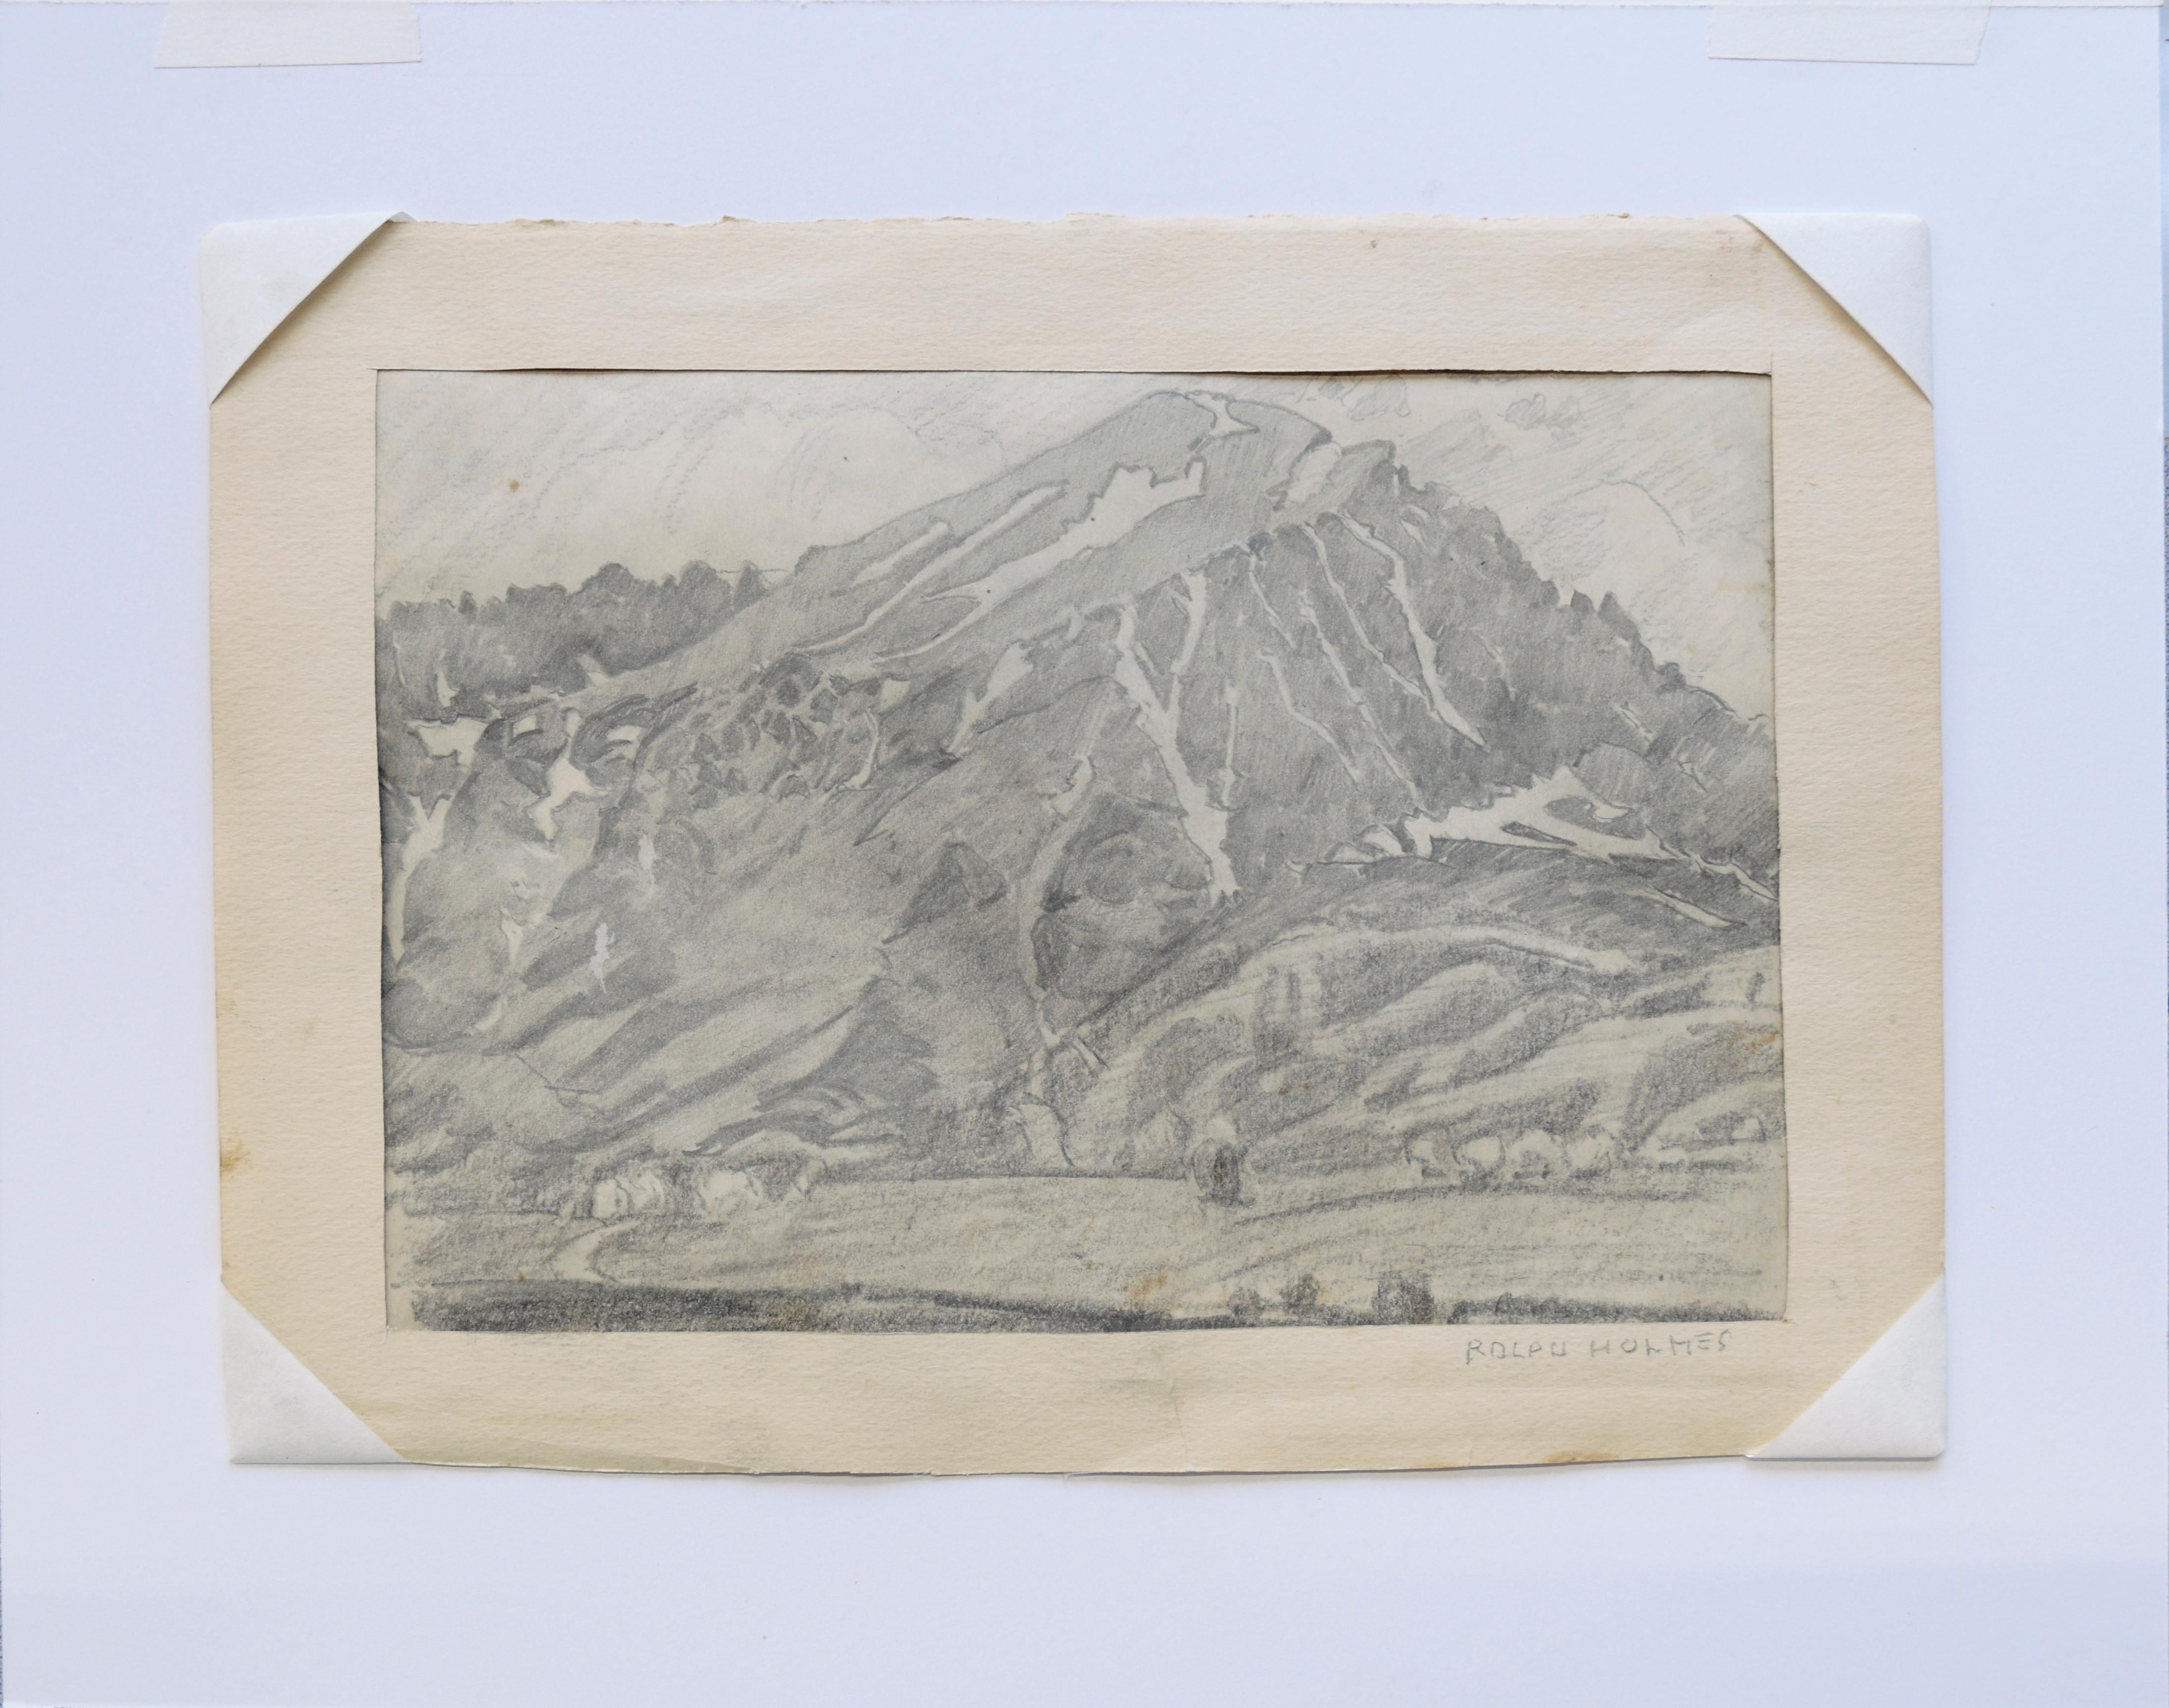 San Gabriel Mountain Landscape in Black and White - Graphite Pencil on Paper For Sale 3